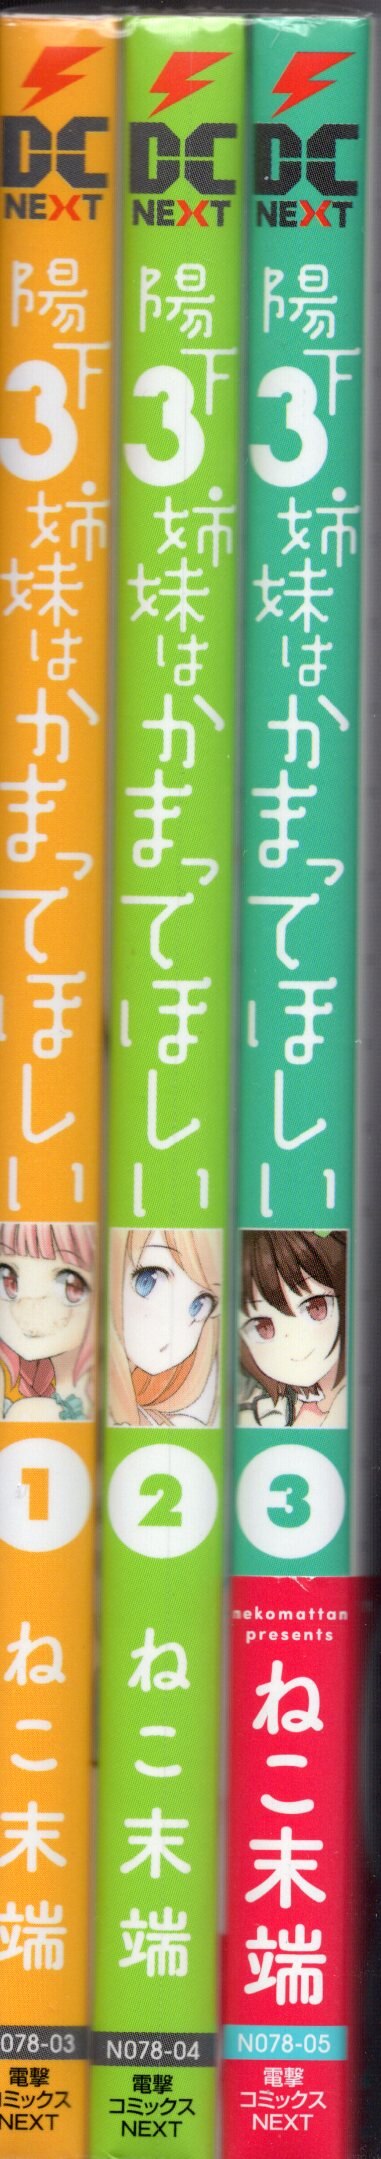 Kadokawa 電撃コミックスnext ねこ末端 陽下3姉妹はかまってほしい全3巻 初版セット まんだらけ Mandarake